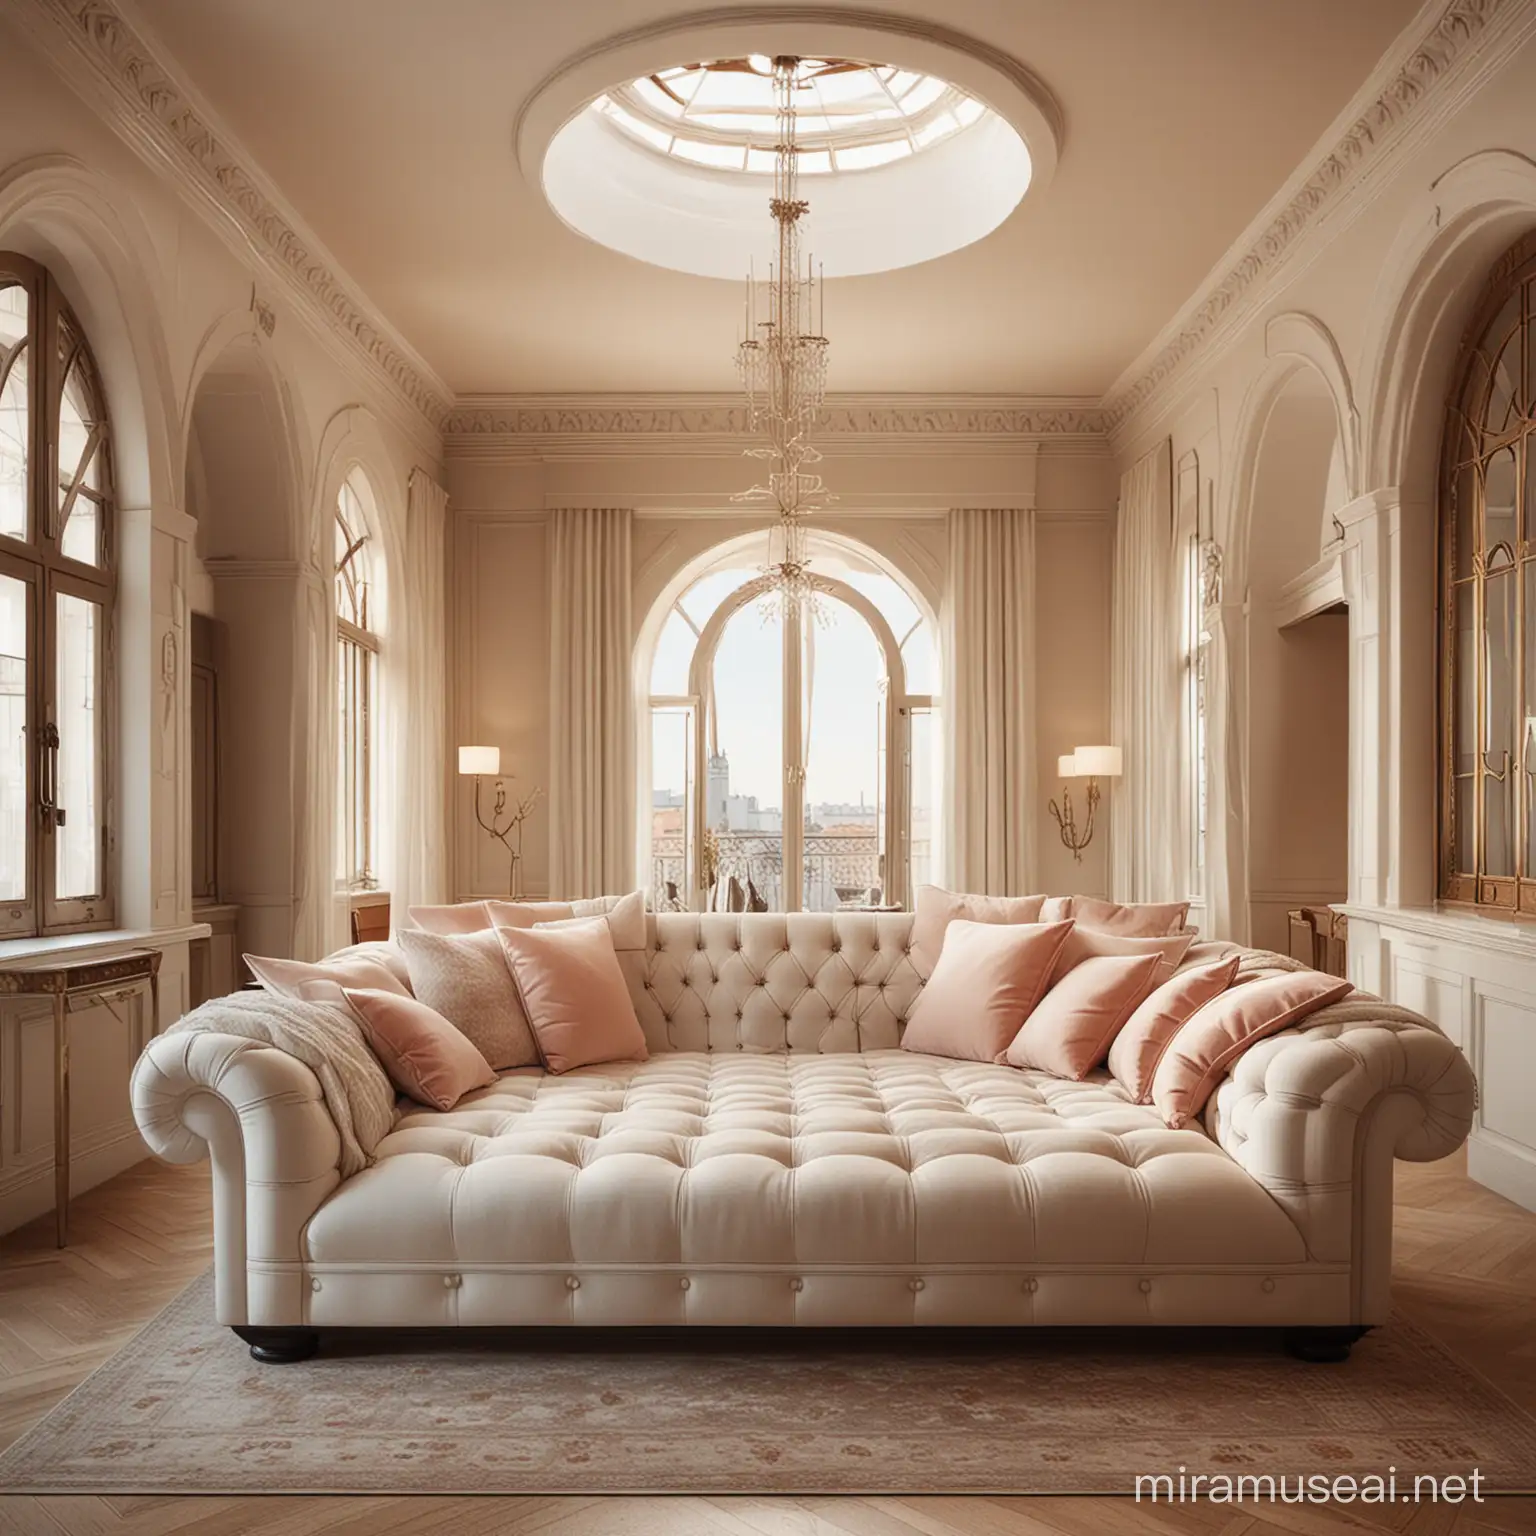 Stylish Living Room with MidJourney Sofa and Luxurious Lighting